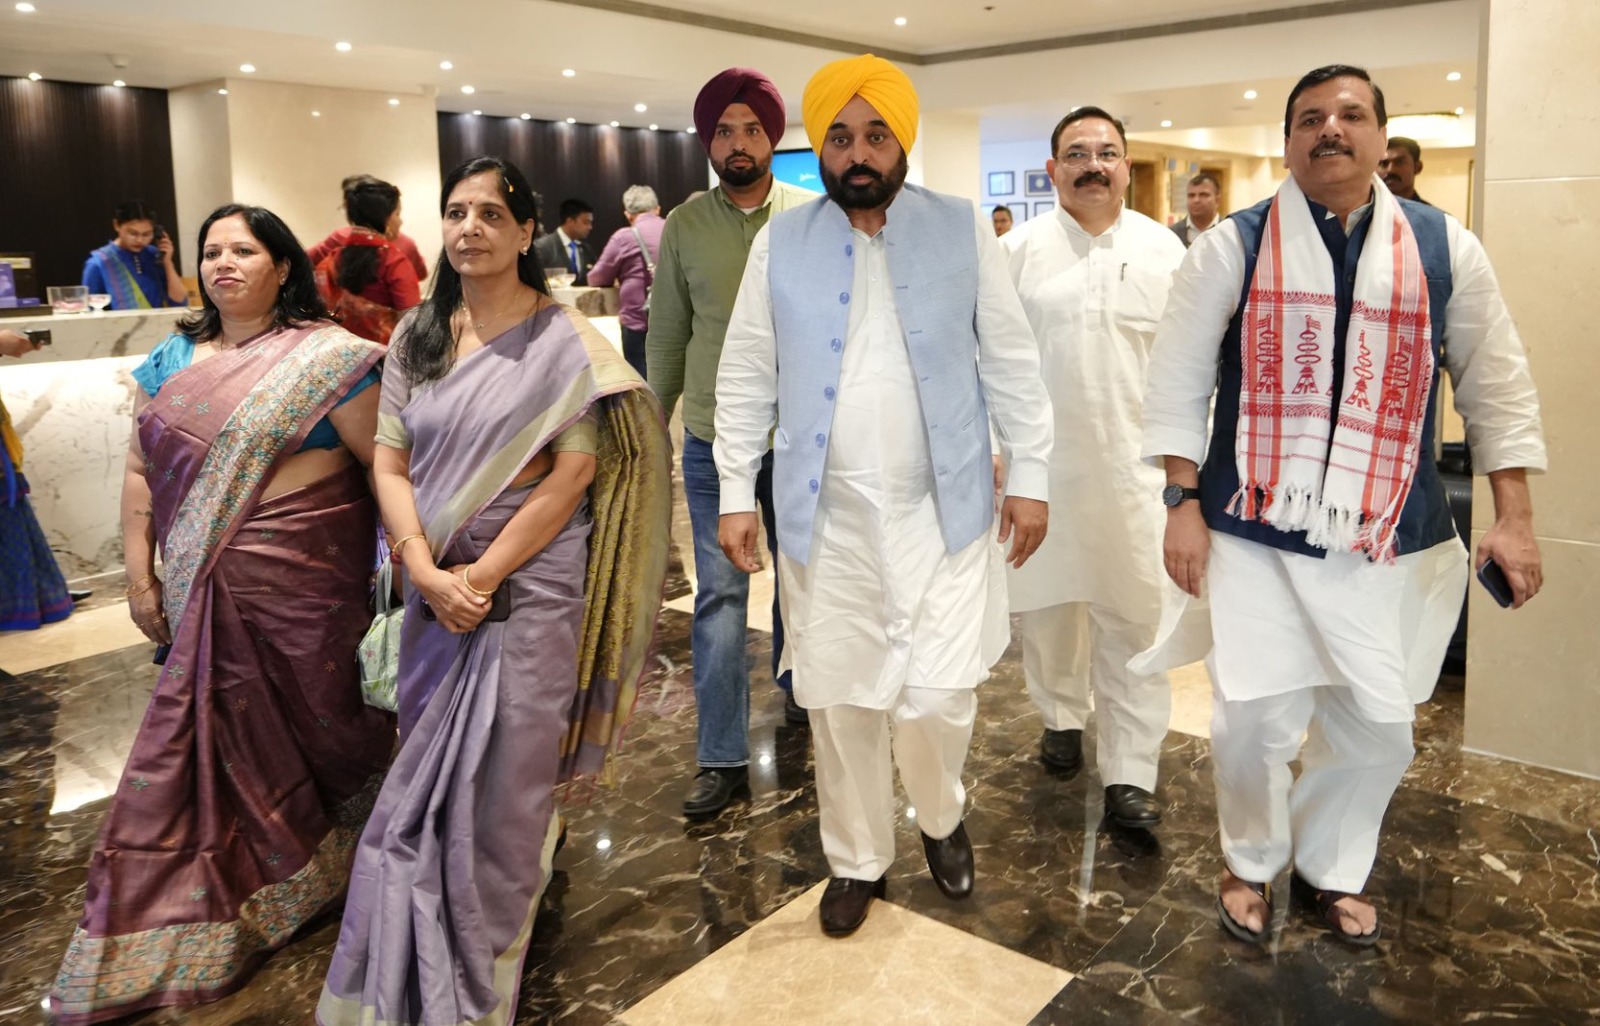 IANS on X: "Ranchi: Punjab CM Bhagwant Mann and Sunita Kejriwal, the wife of jailed Delhi CM Arvind Kejriwal, reach Ranchi to attend the INDIA bloc's Ulgulan Nyay Maha Rally https://t.co/OZiwauSsbI" /